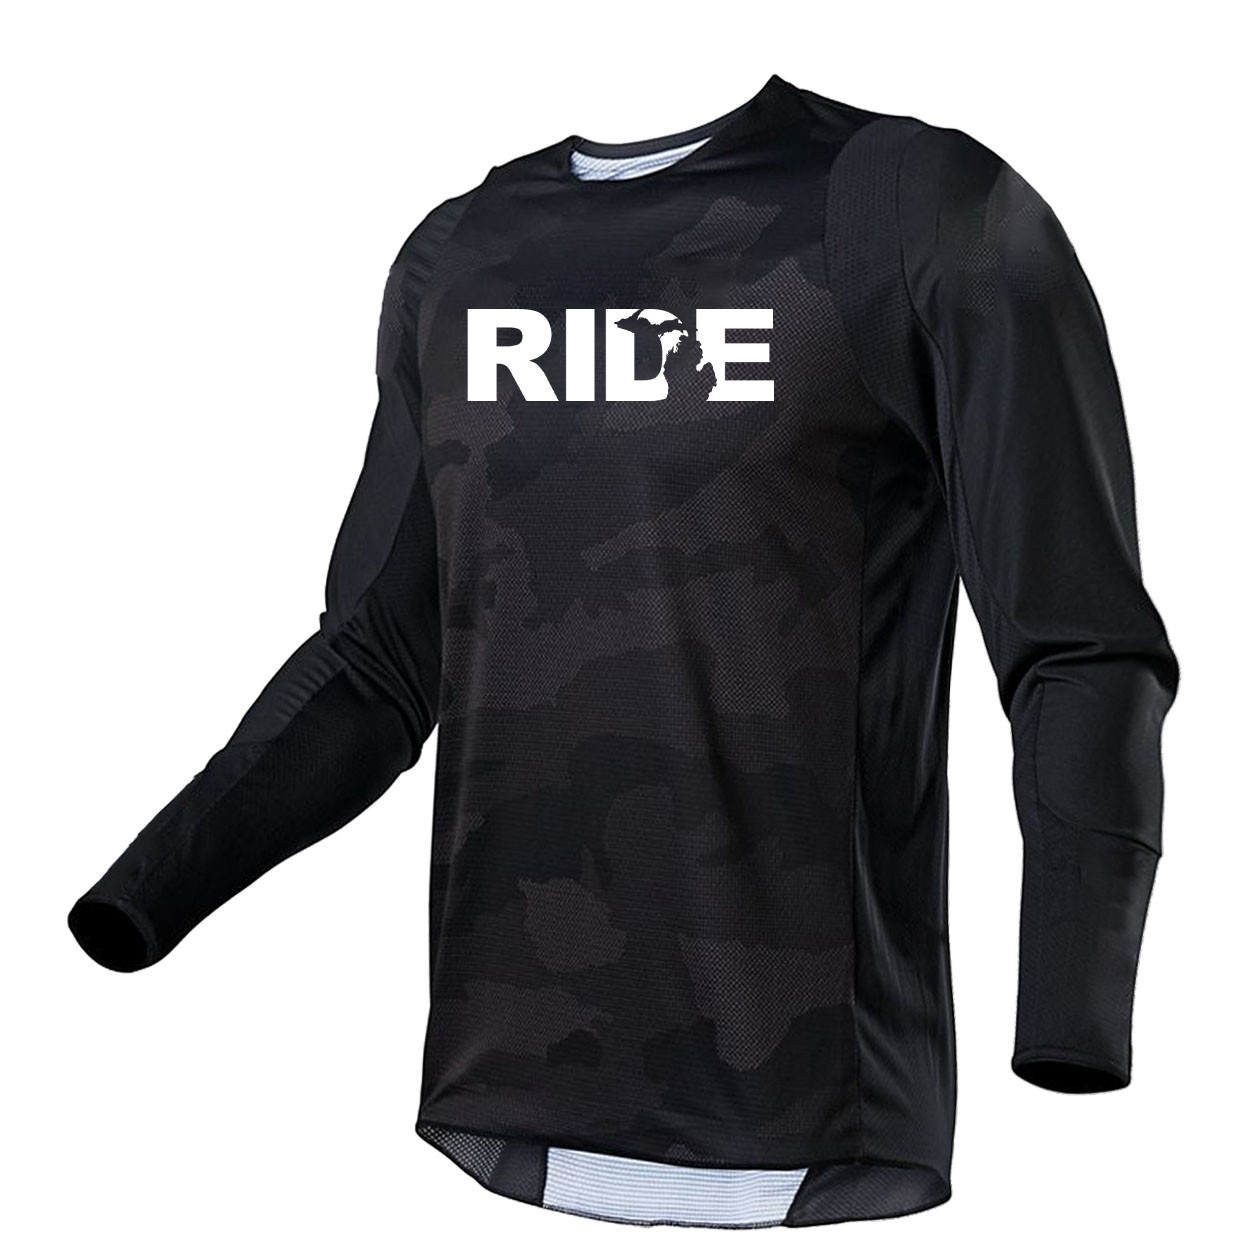 Ride Michigan Classic Performance Jersey Long Sleeve Shirt Black Camo